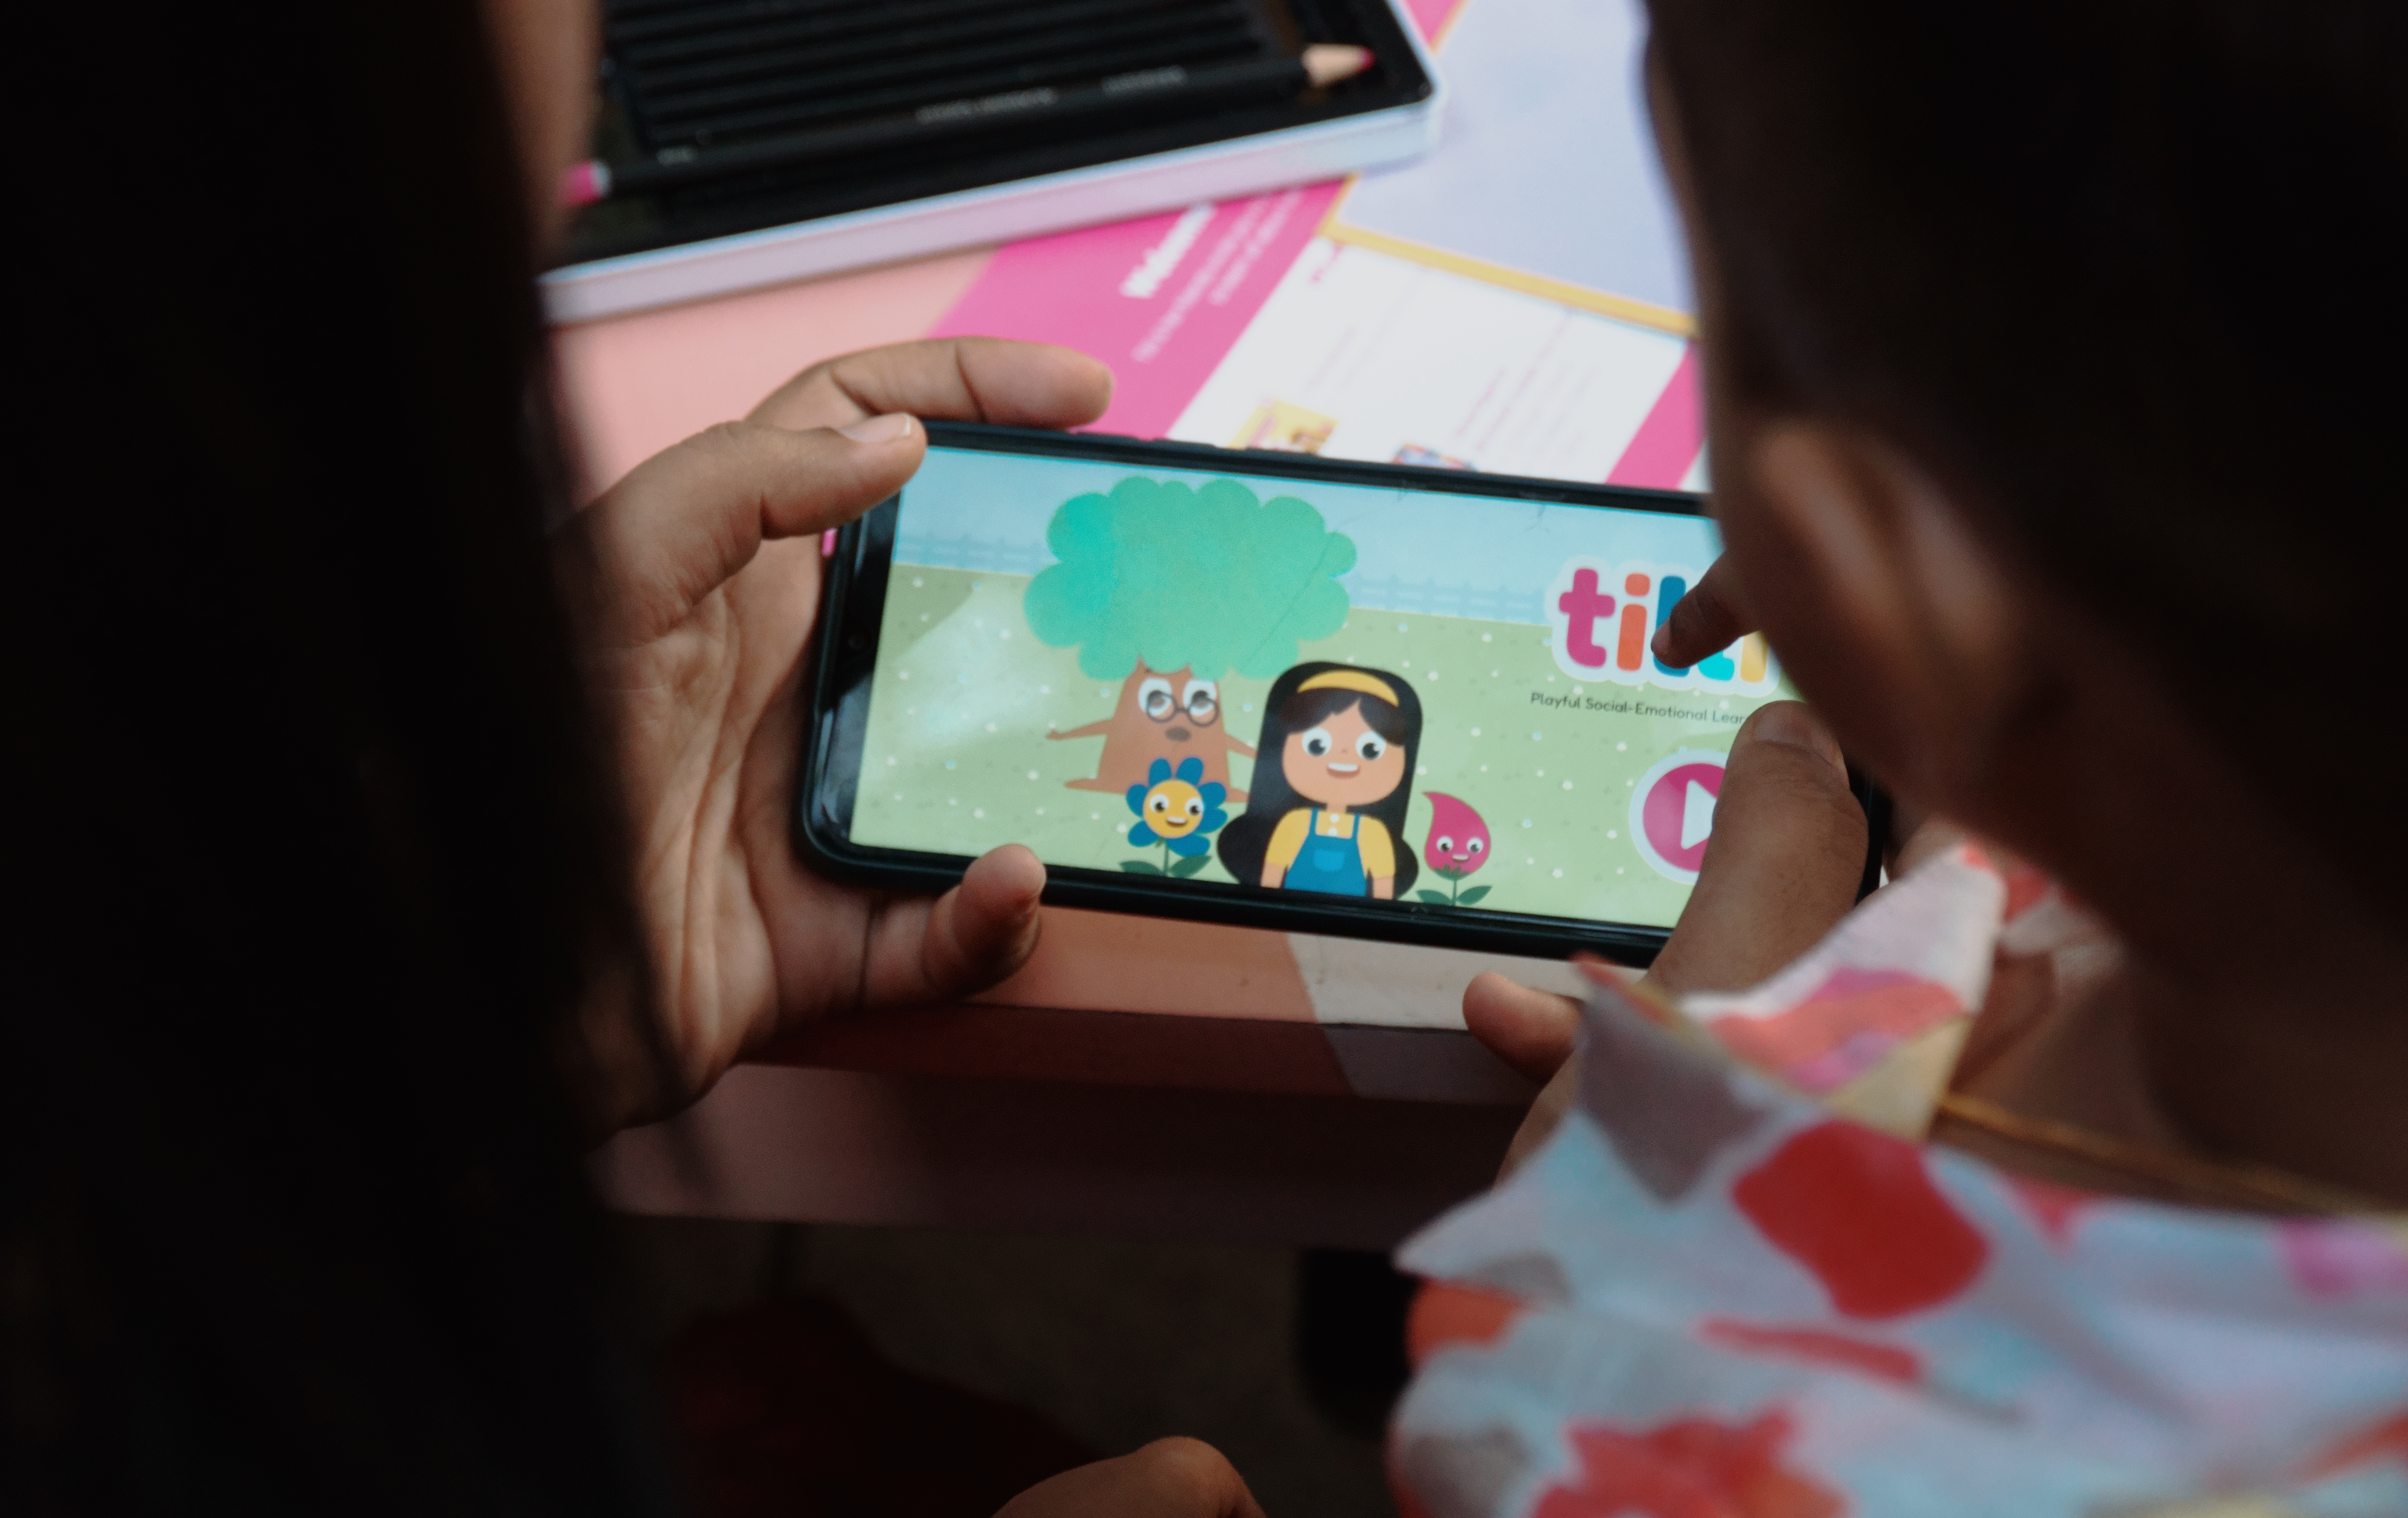 Tilli developed a play-based social-emotional learning tool @Tilli